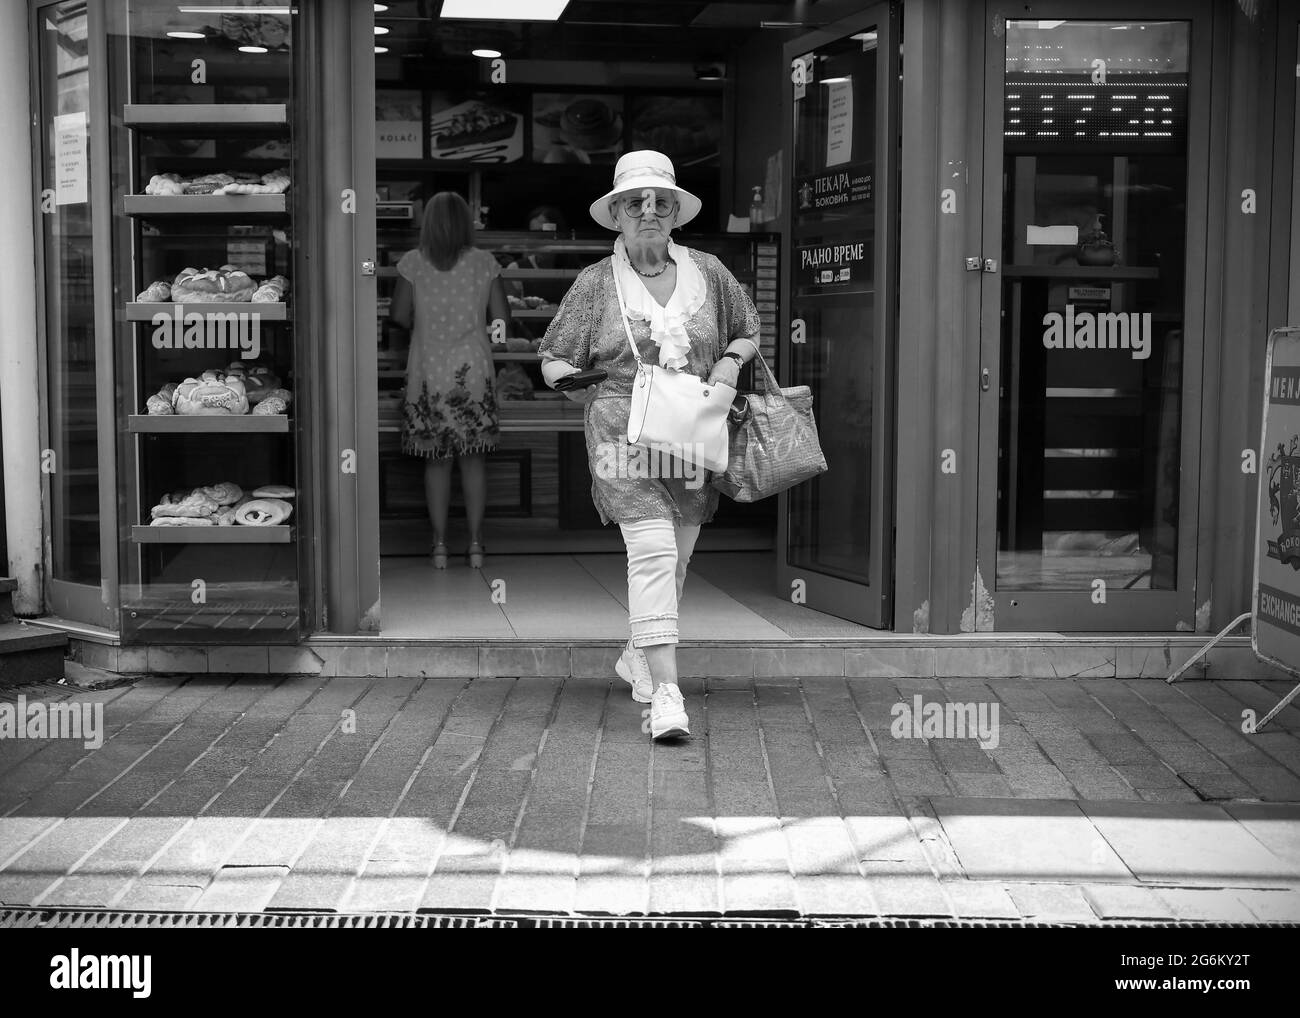 Belgrade, Serbia, Jul 3, 2021: An elderly woman wearing a white hat exits the bakery (B/W) Stock Photo